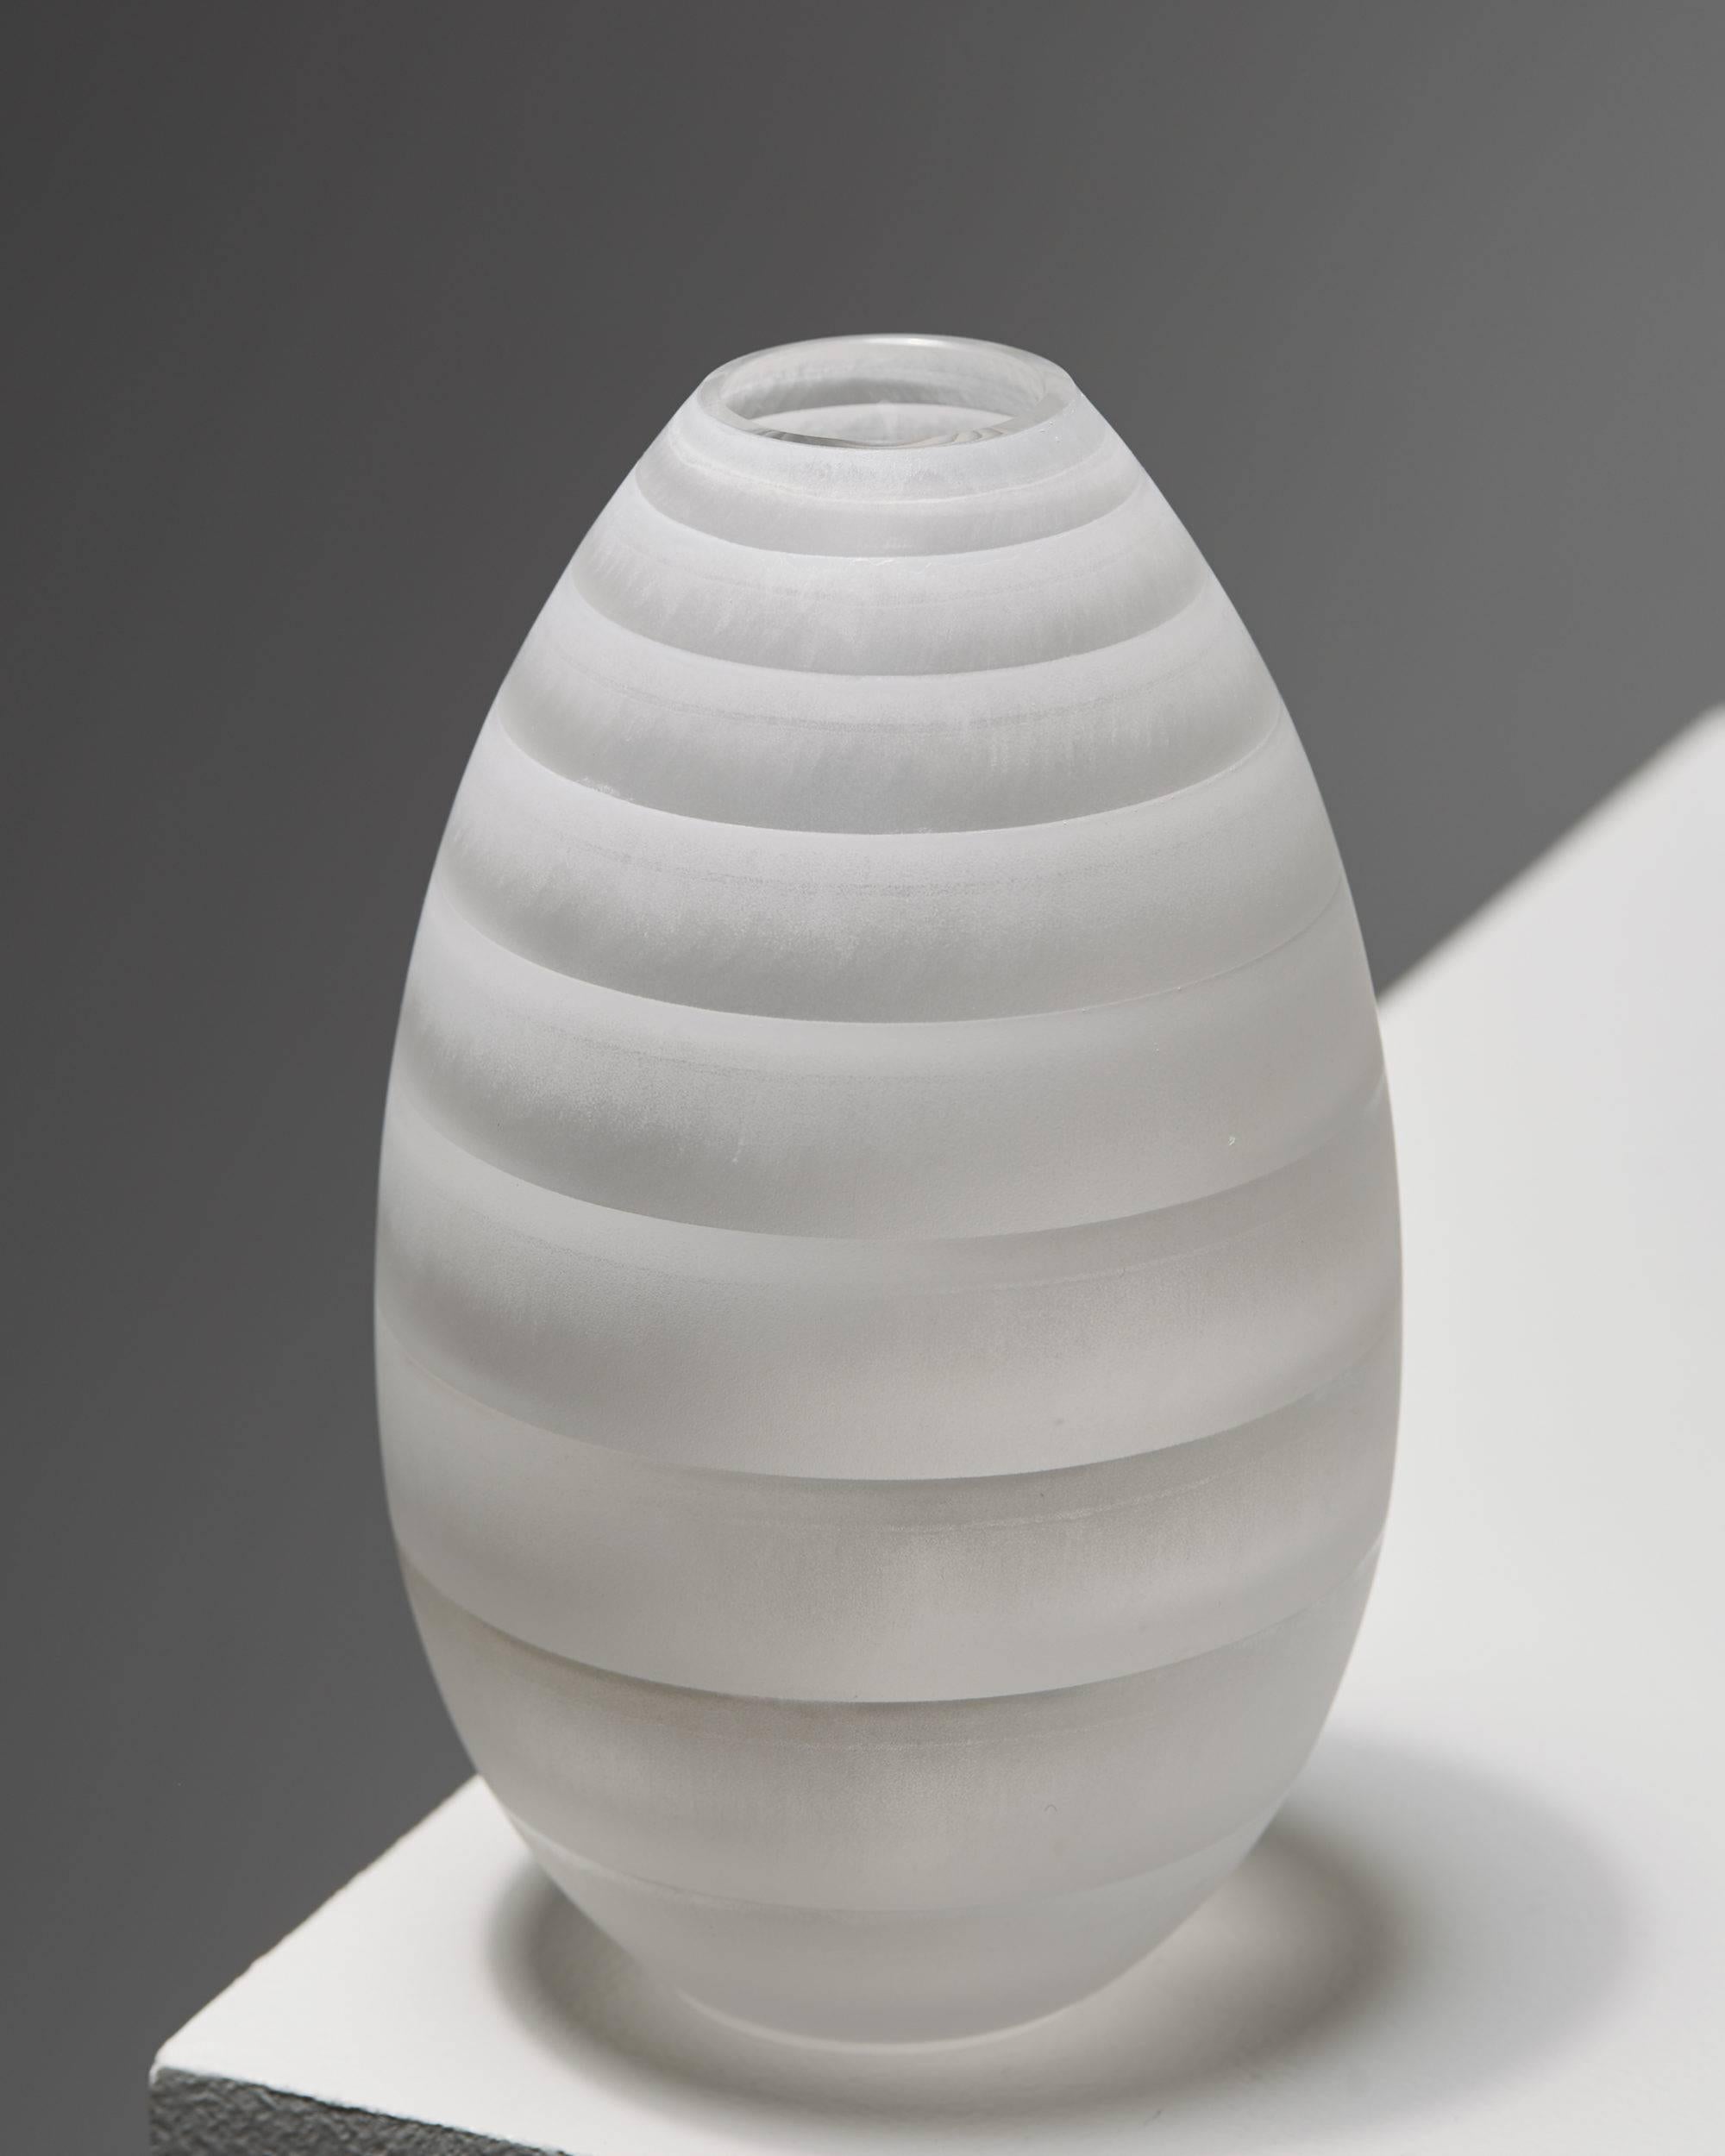 Vase “Bonbon” designed by Ingegerd Råman for Orrefors,
Sweden, 2010.
Glass.

Measures: H 15 cm/ 5 7/8